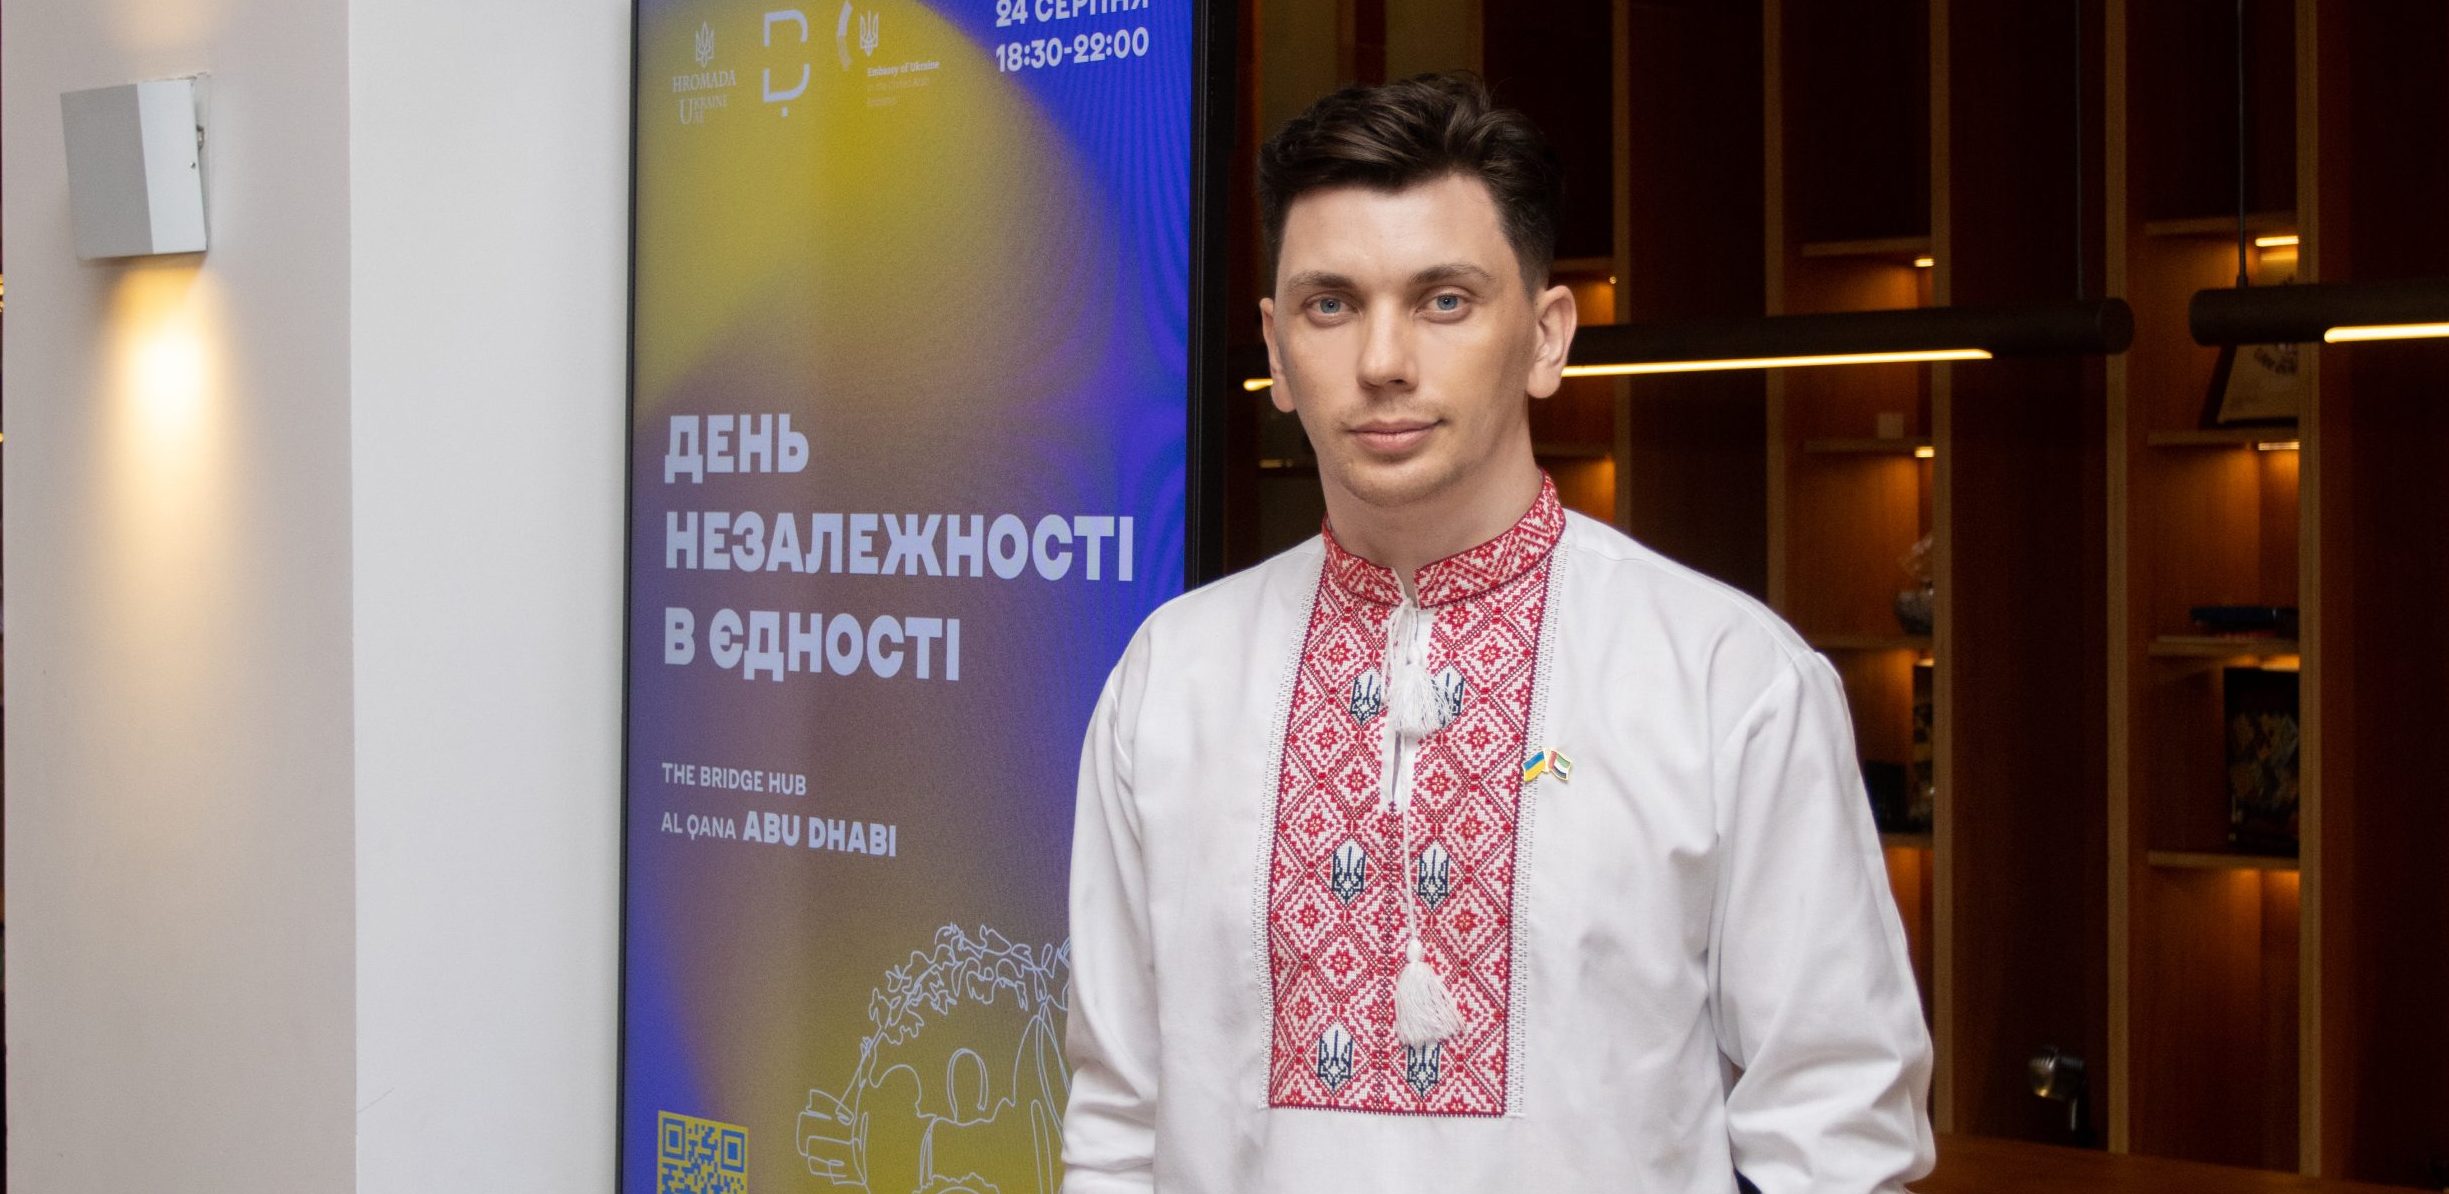 UAE’s Ukrainian community thrives on supporting Ukraine – Semenov